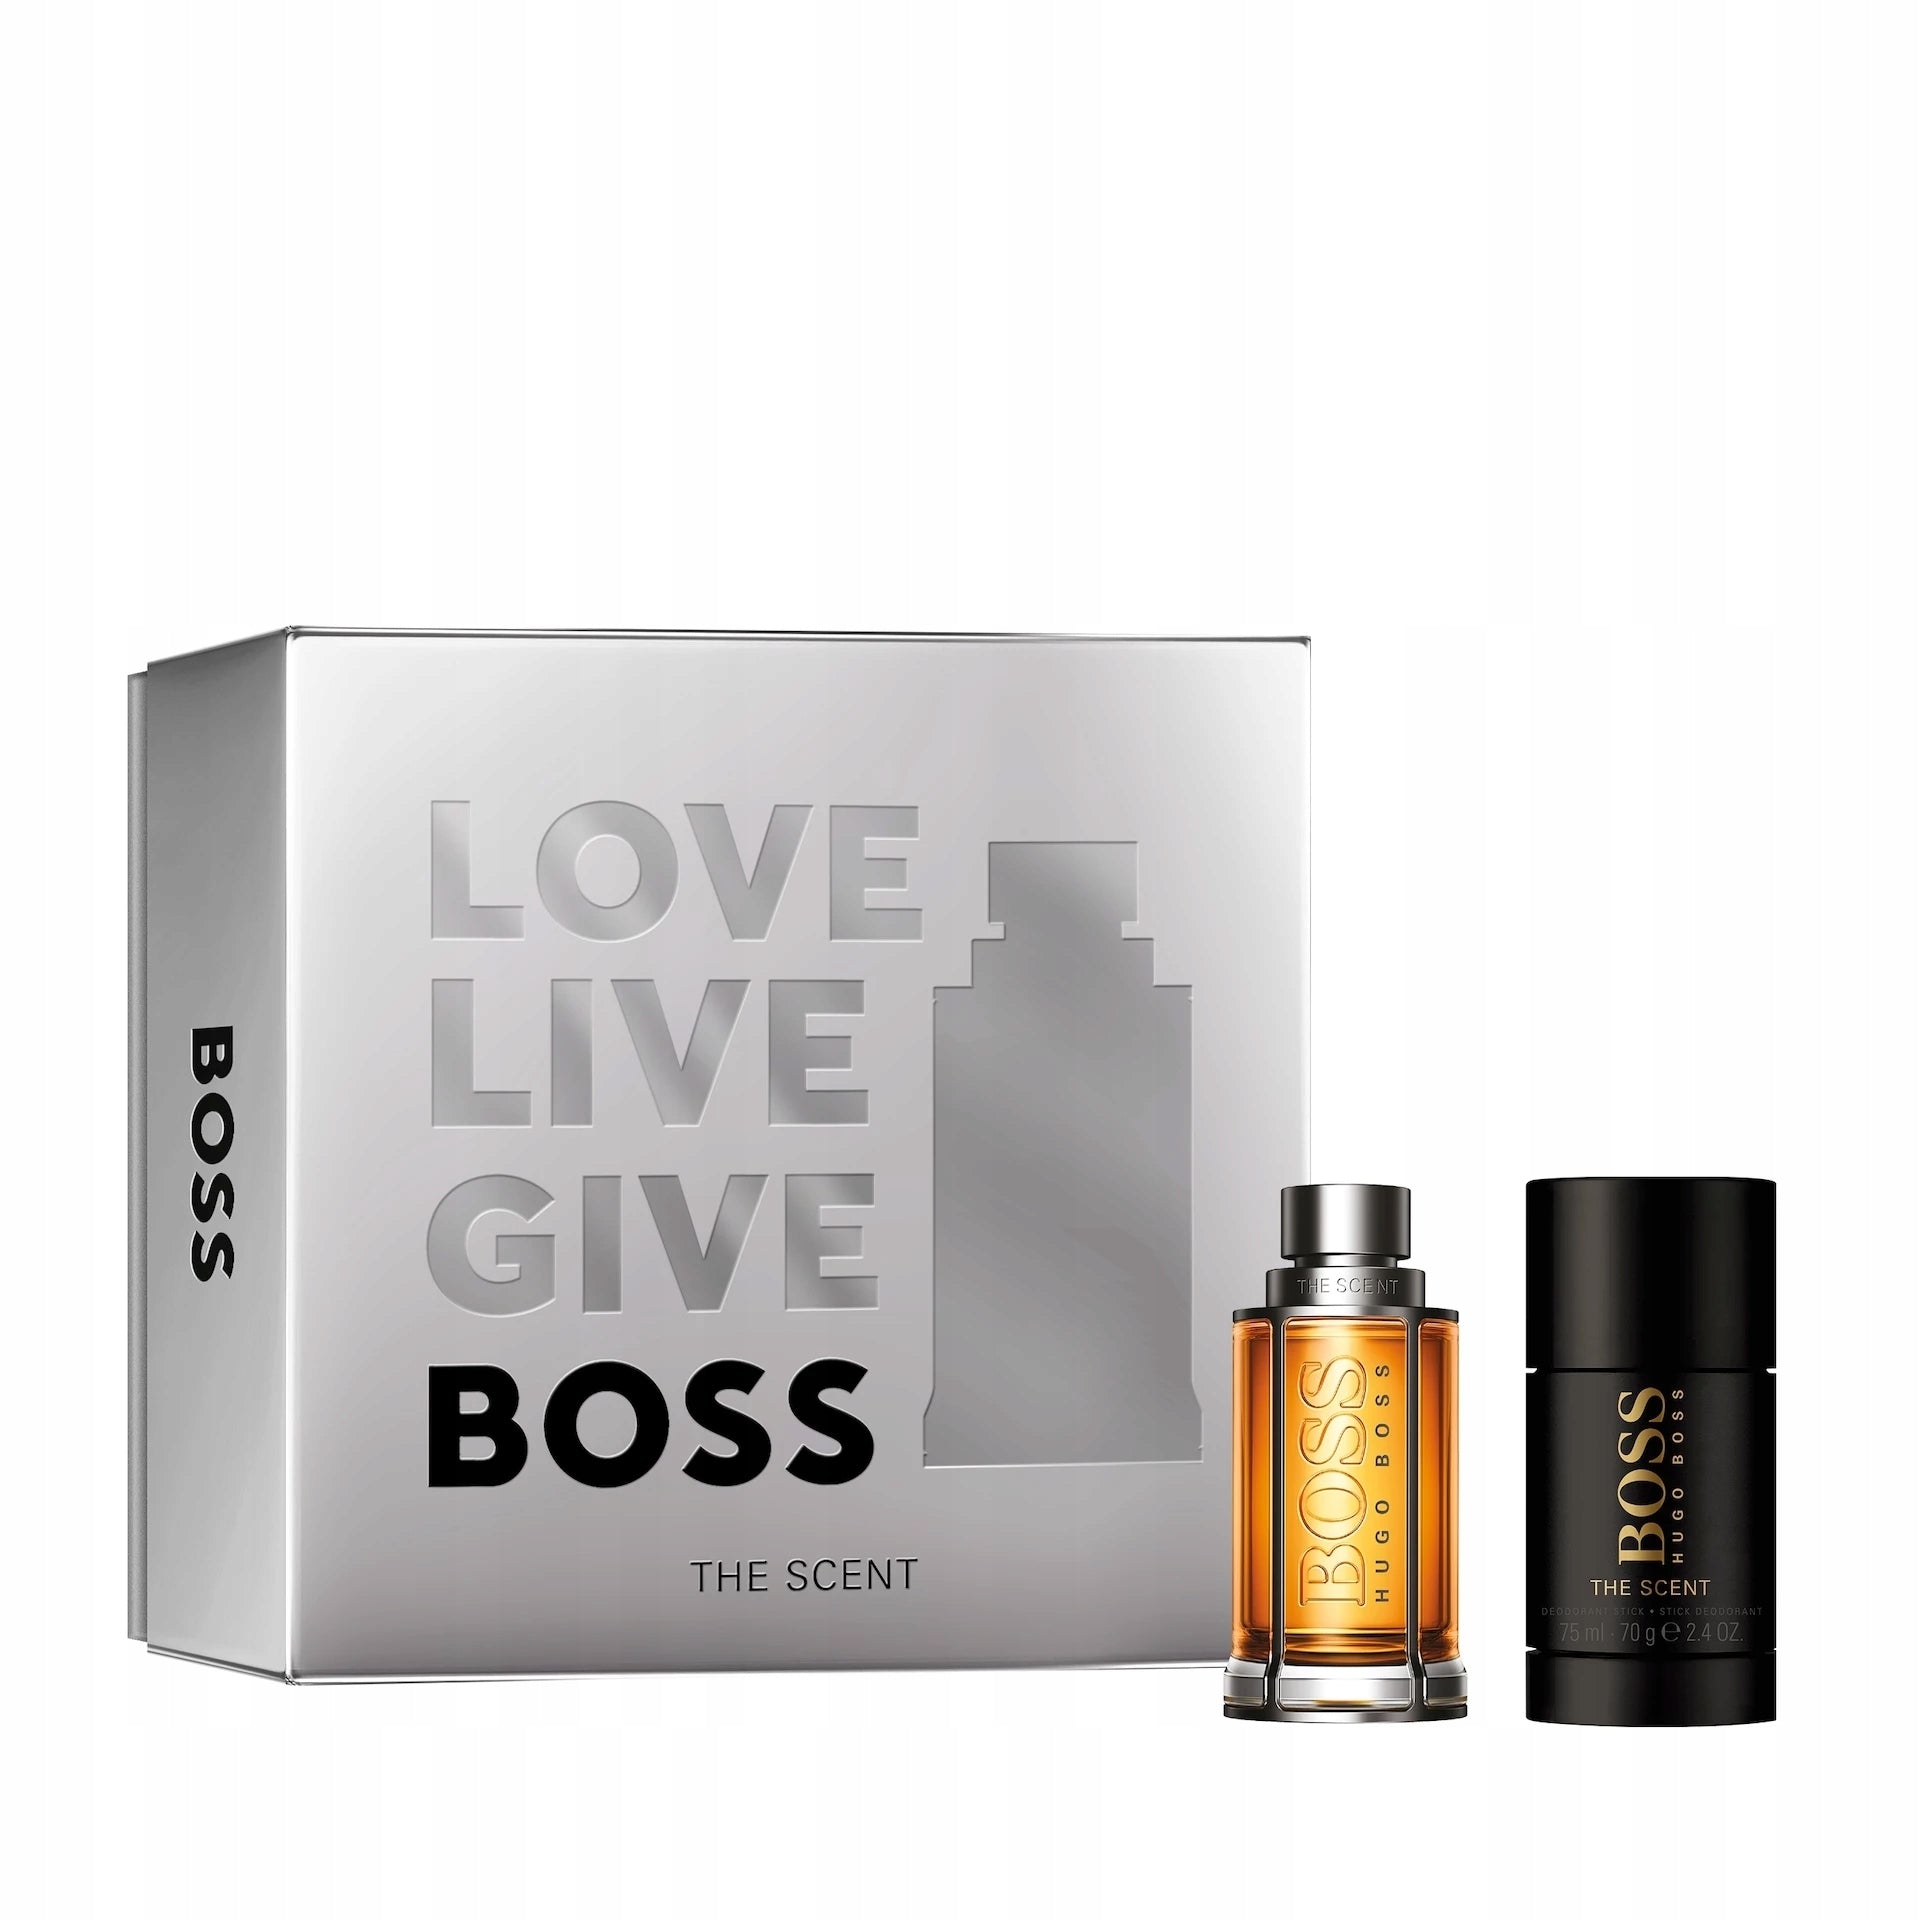 Hugo Boss Boss The Scent EDT Grooming Set | My Perfume Shop Australia